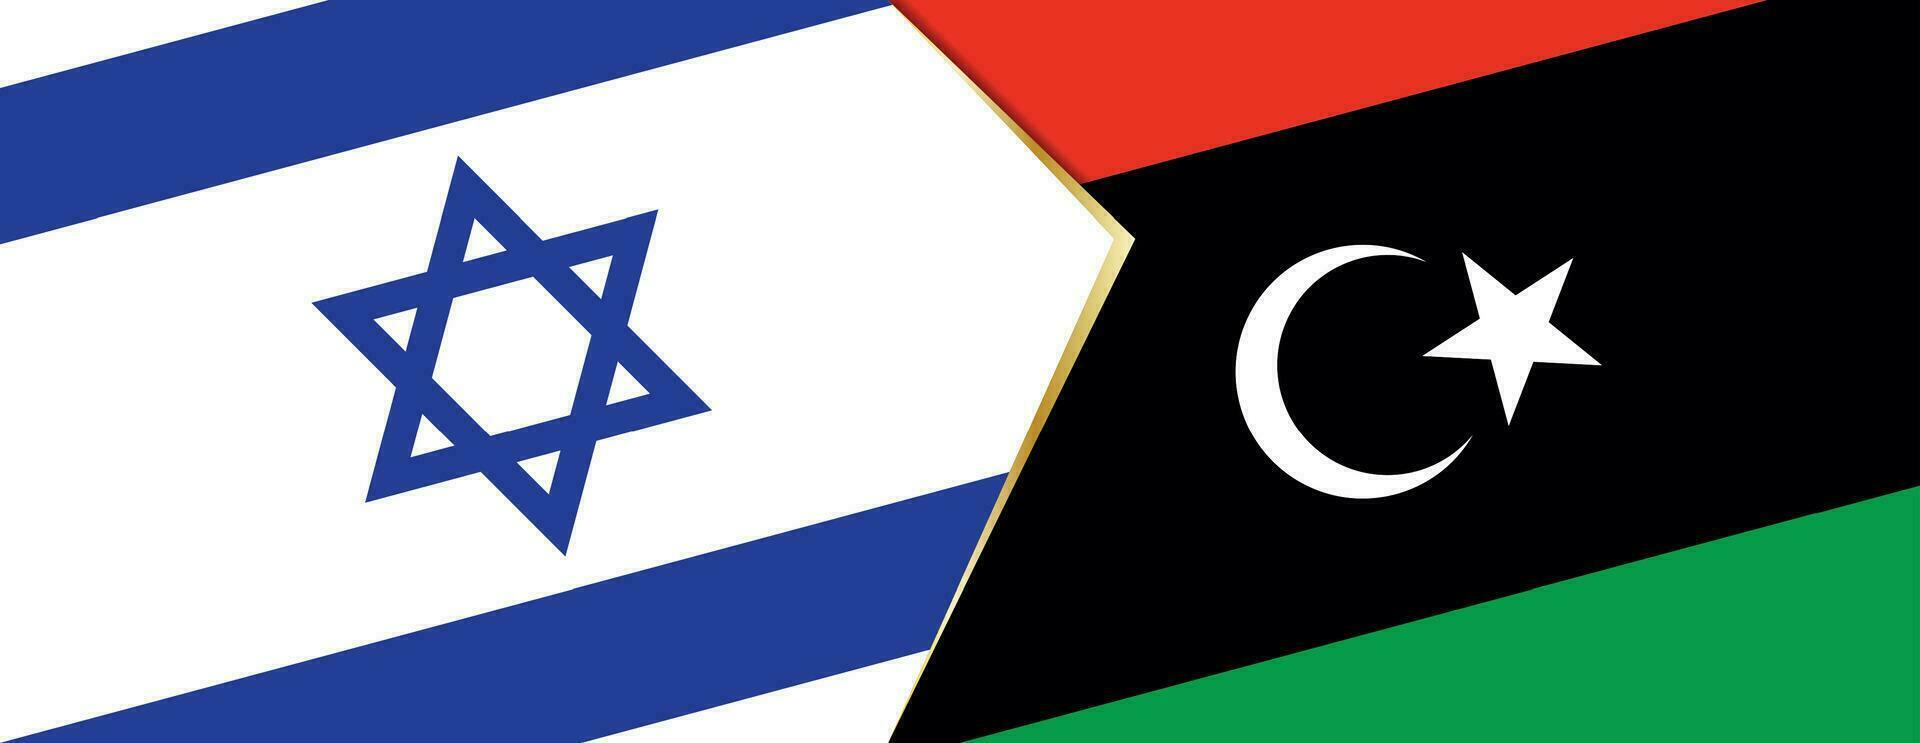 Israele e Libia bandiere, Due vettore bandiere.